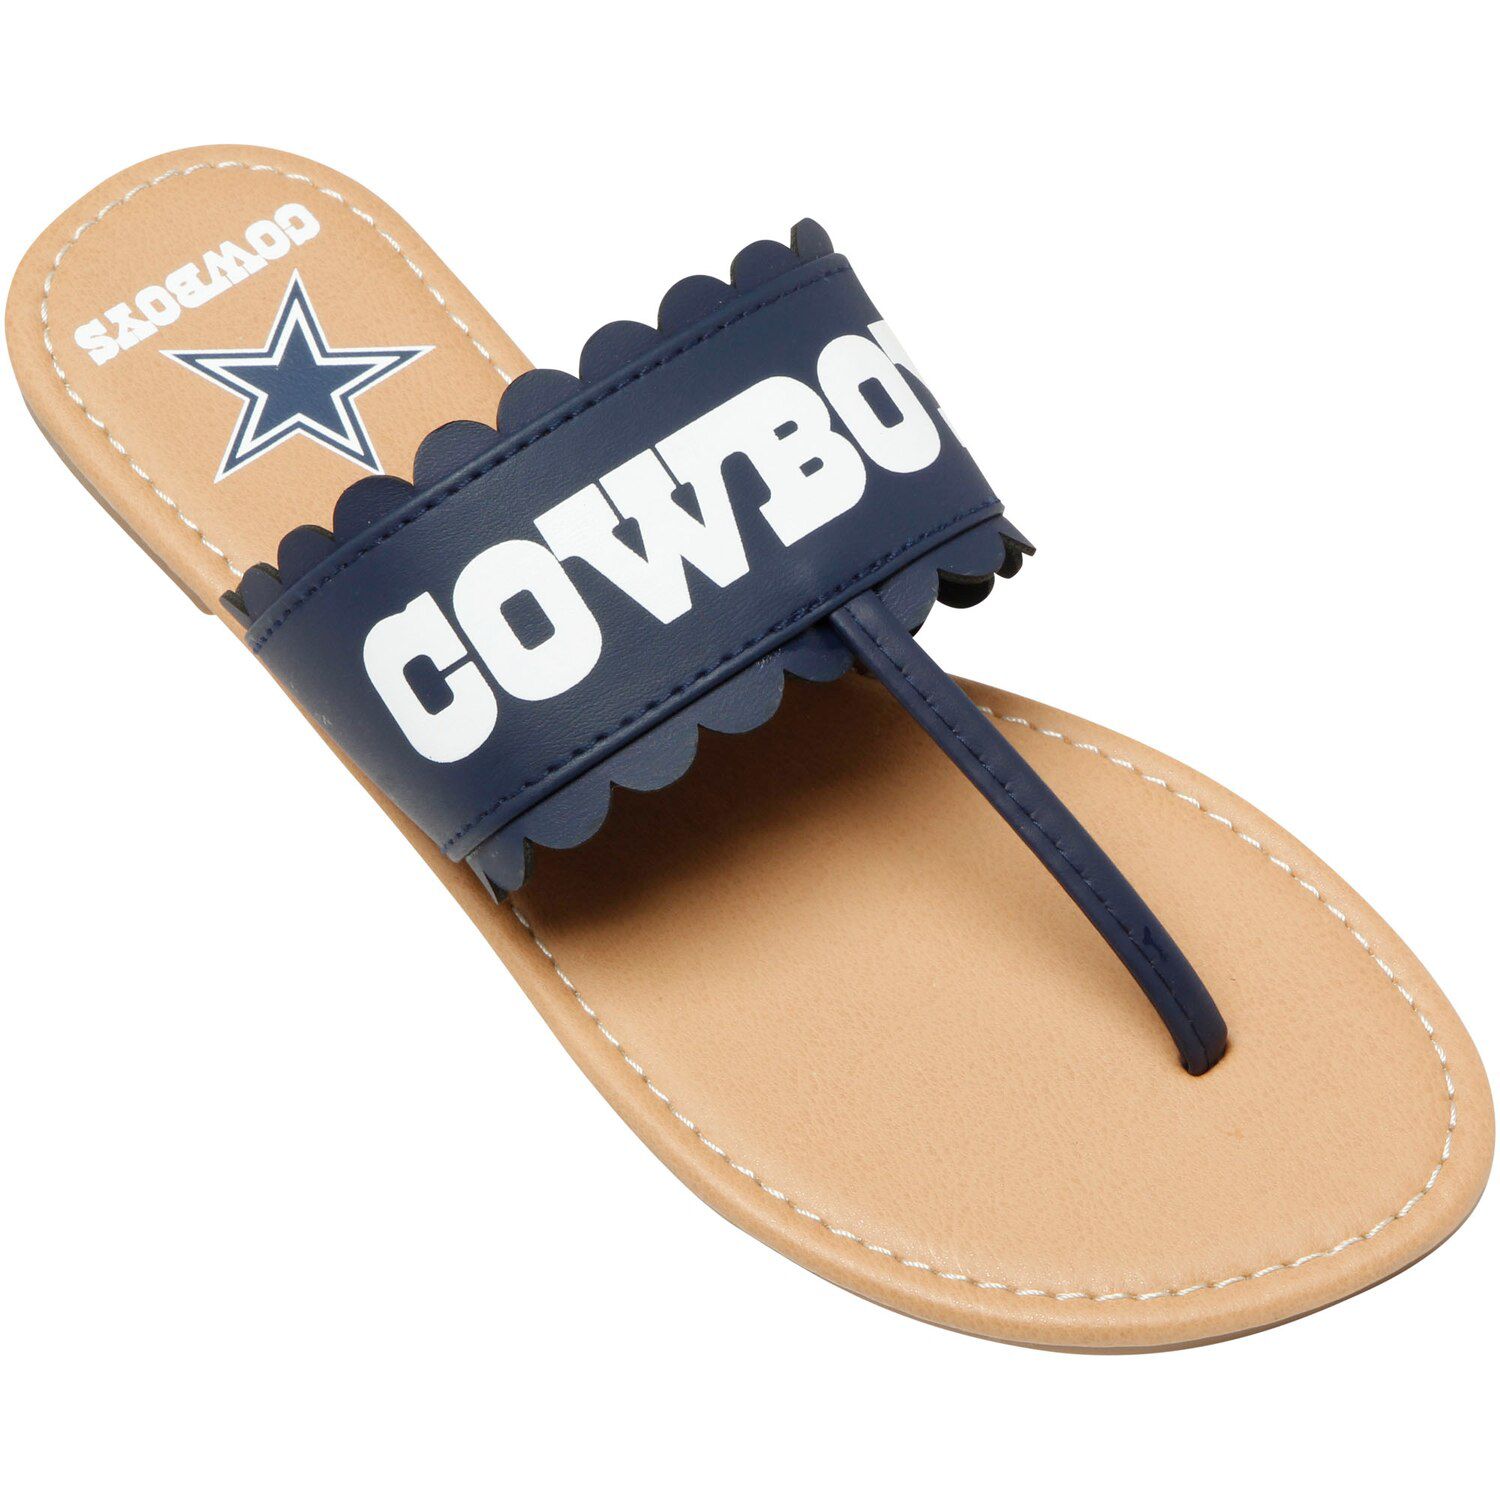 dallas cowboys flip flop slippers